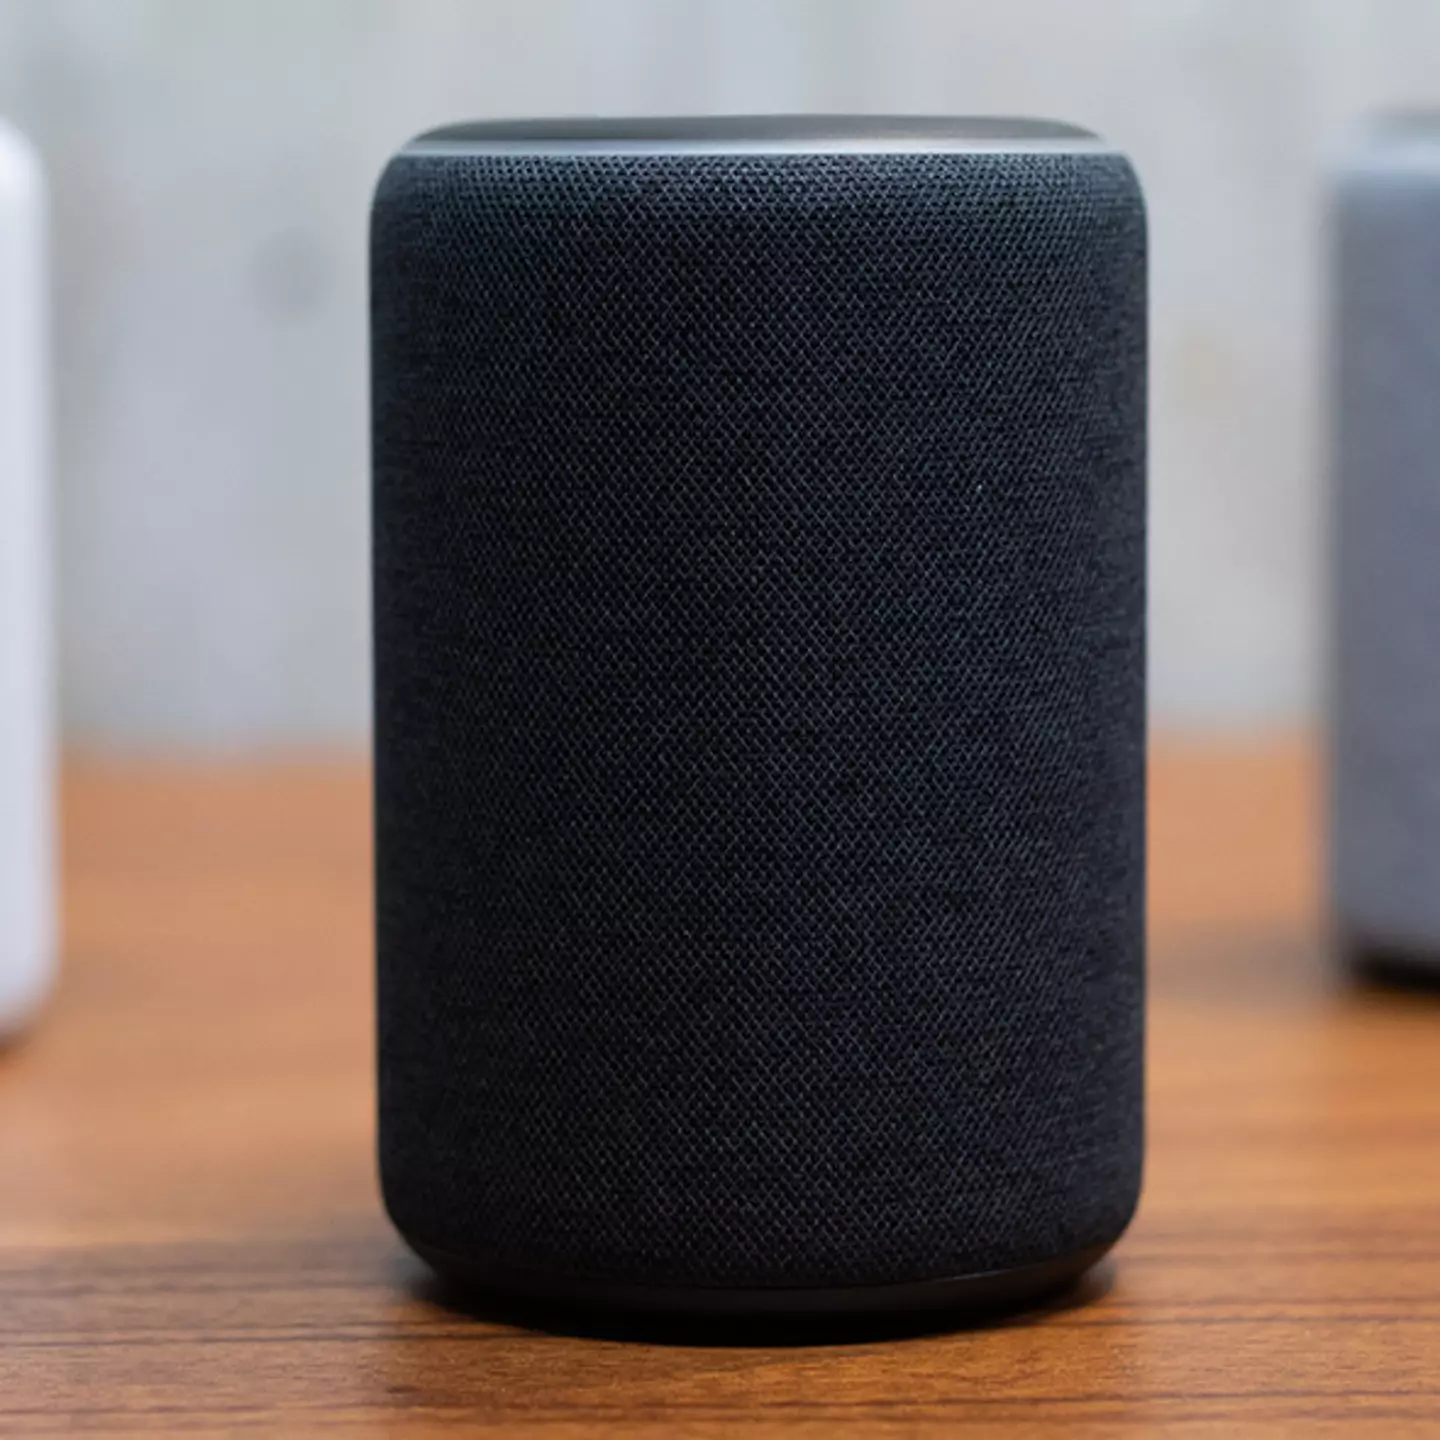 Experts warn Amazon Echo Alexa shouldn’t be kept in bedrooms for this creepy reason